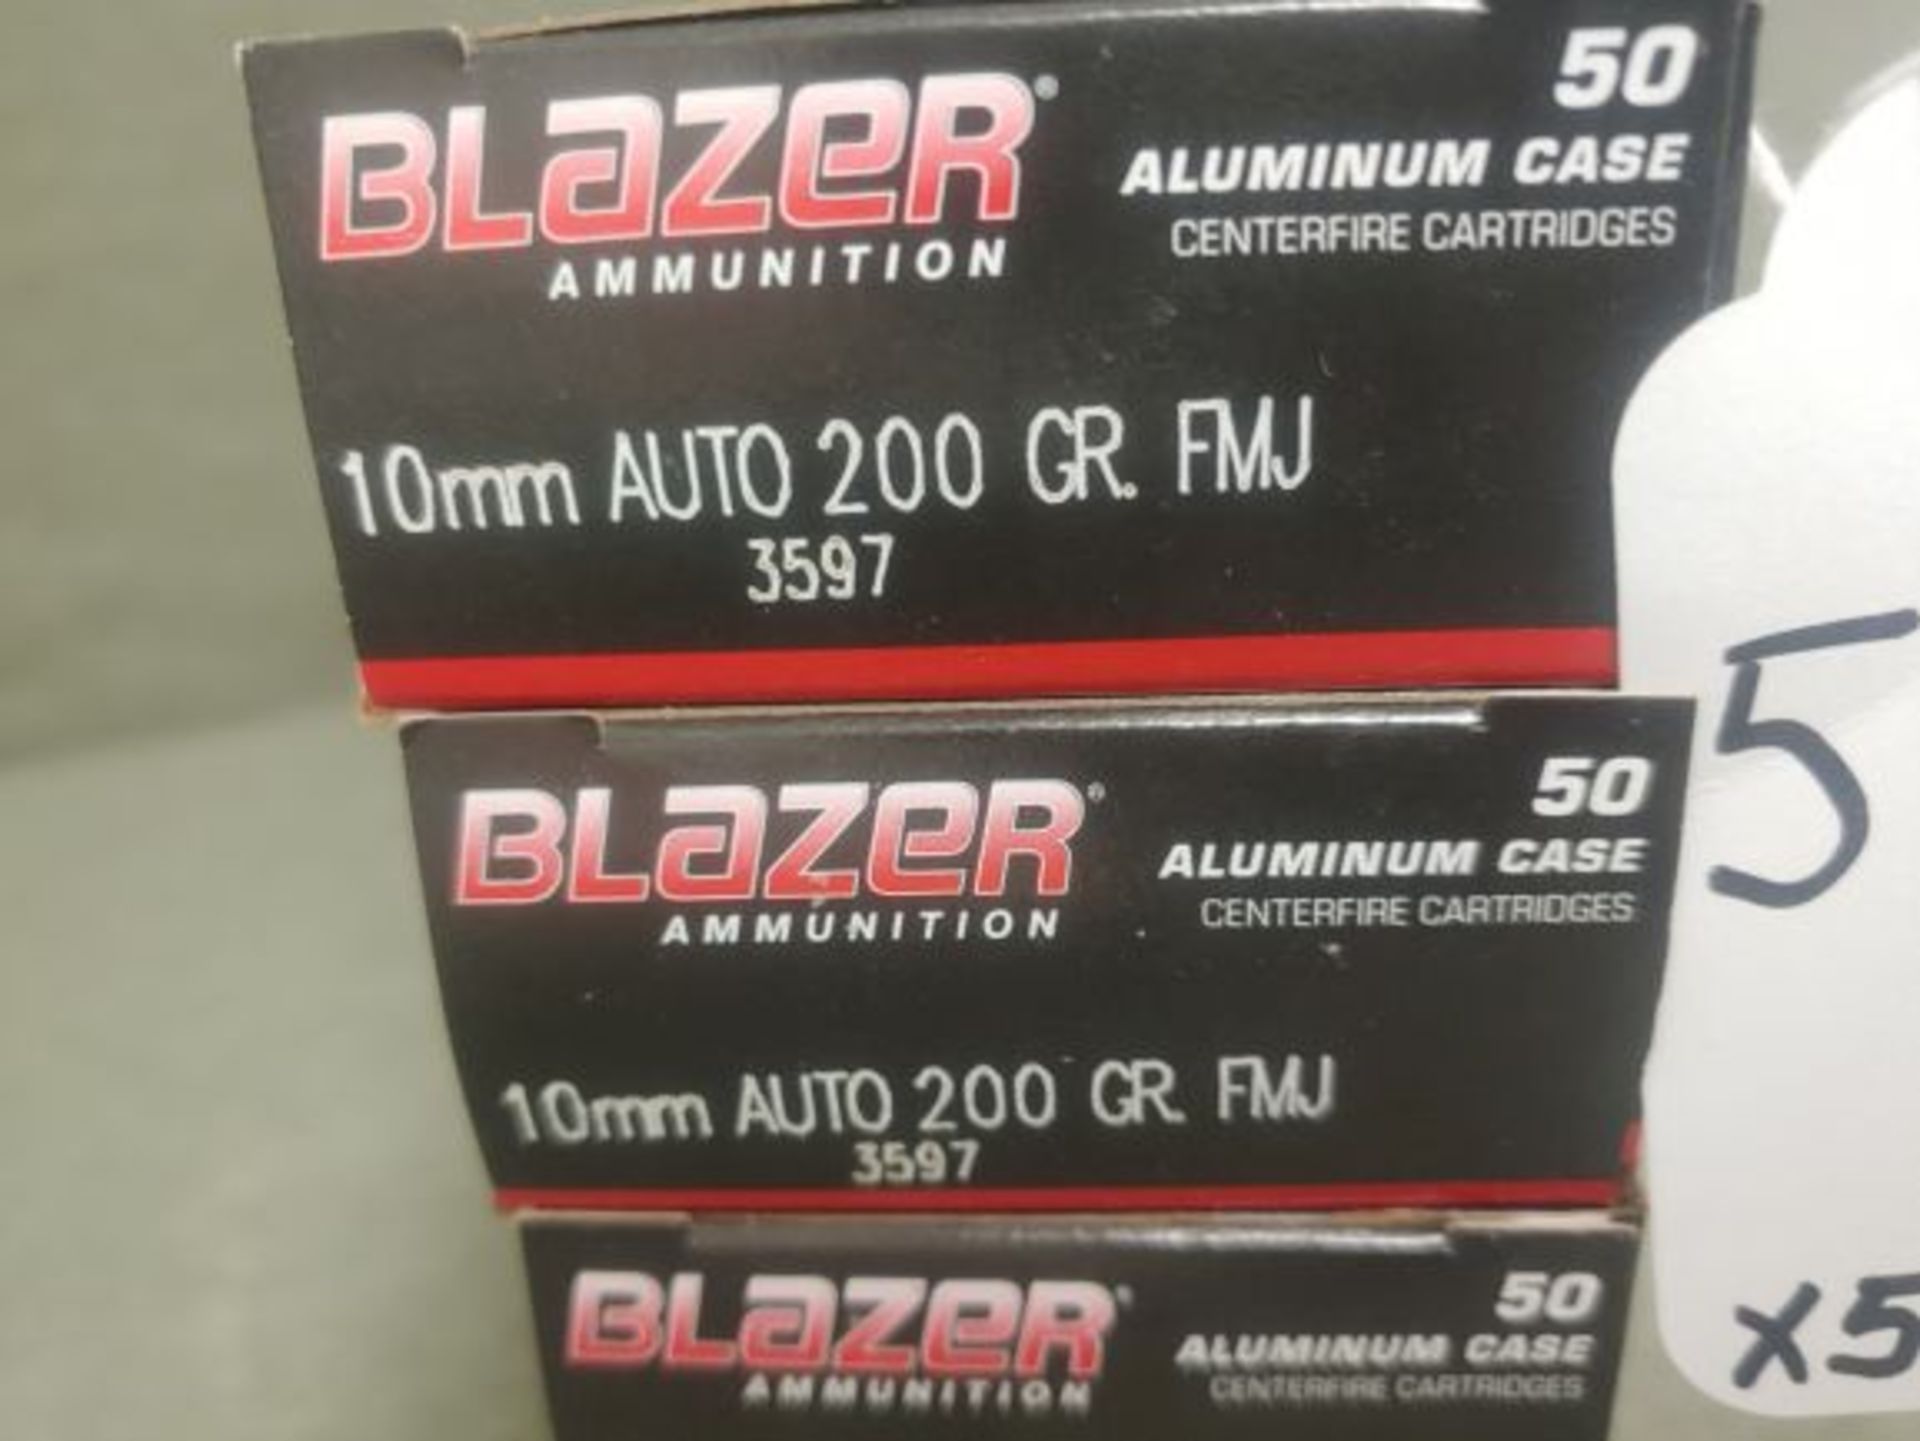 544. Blazer 10mm Auto Alum. Case 200gr. FMJ, 50 Rnd. Boxes (5x the Money) - Image 2 of 2